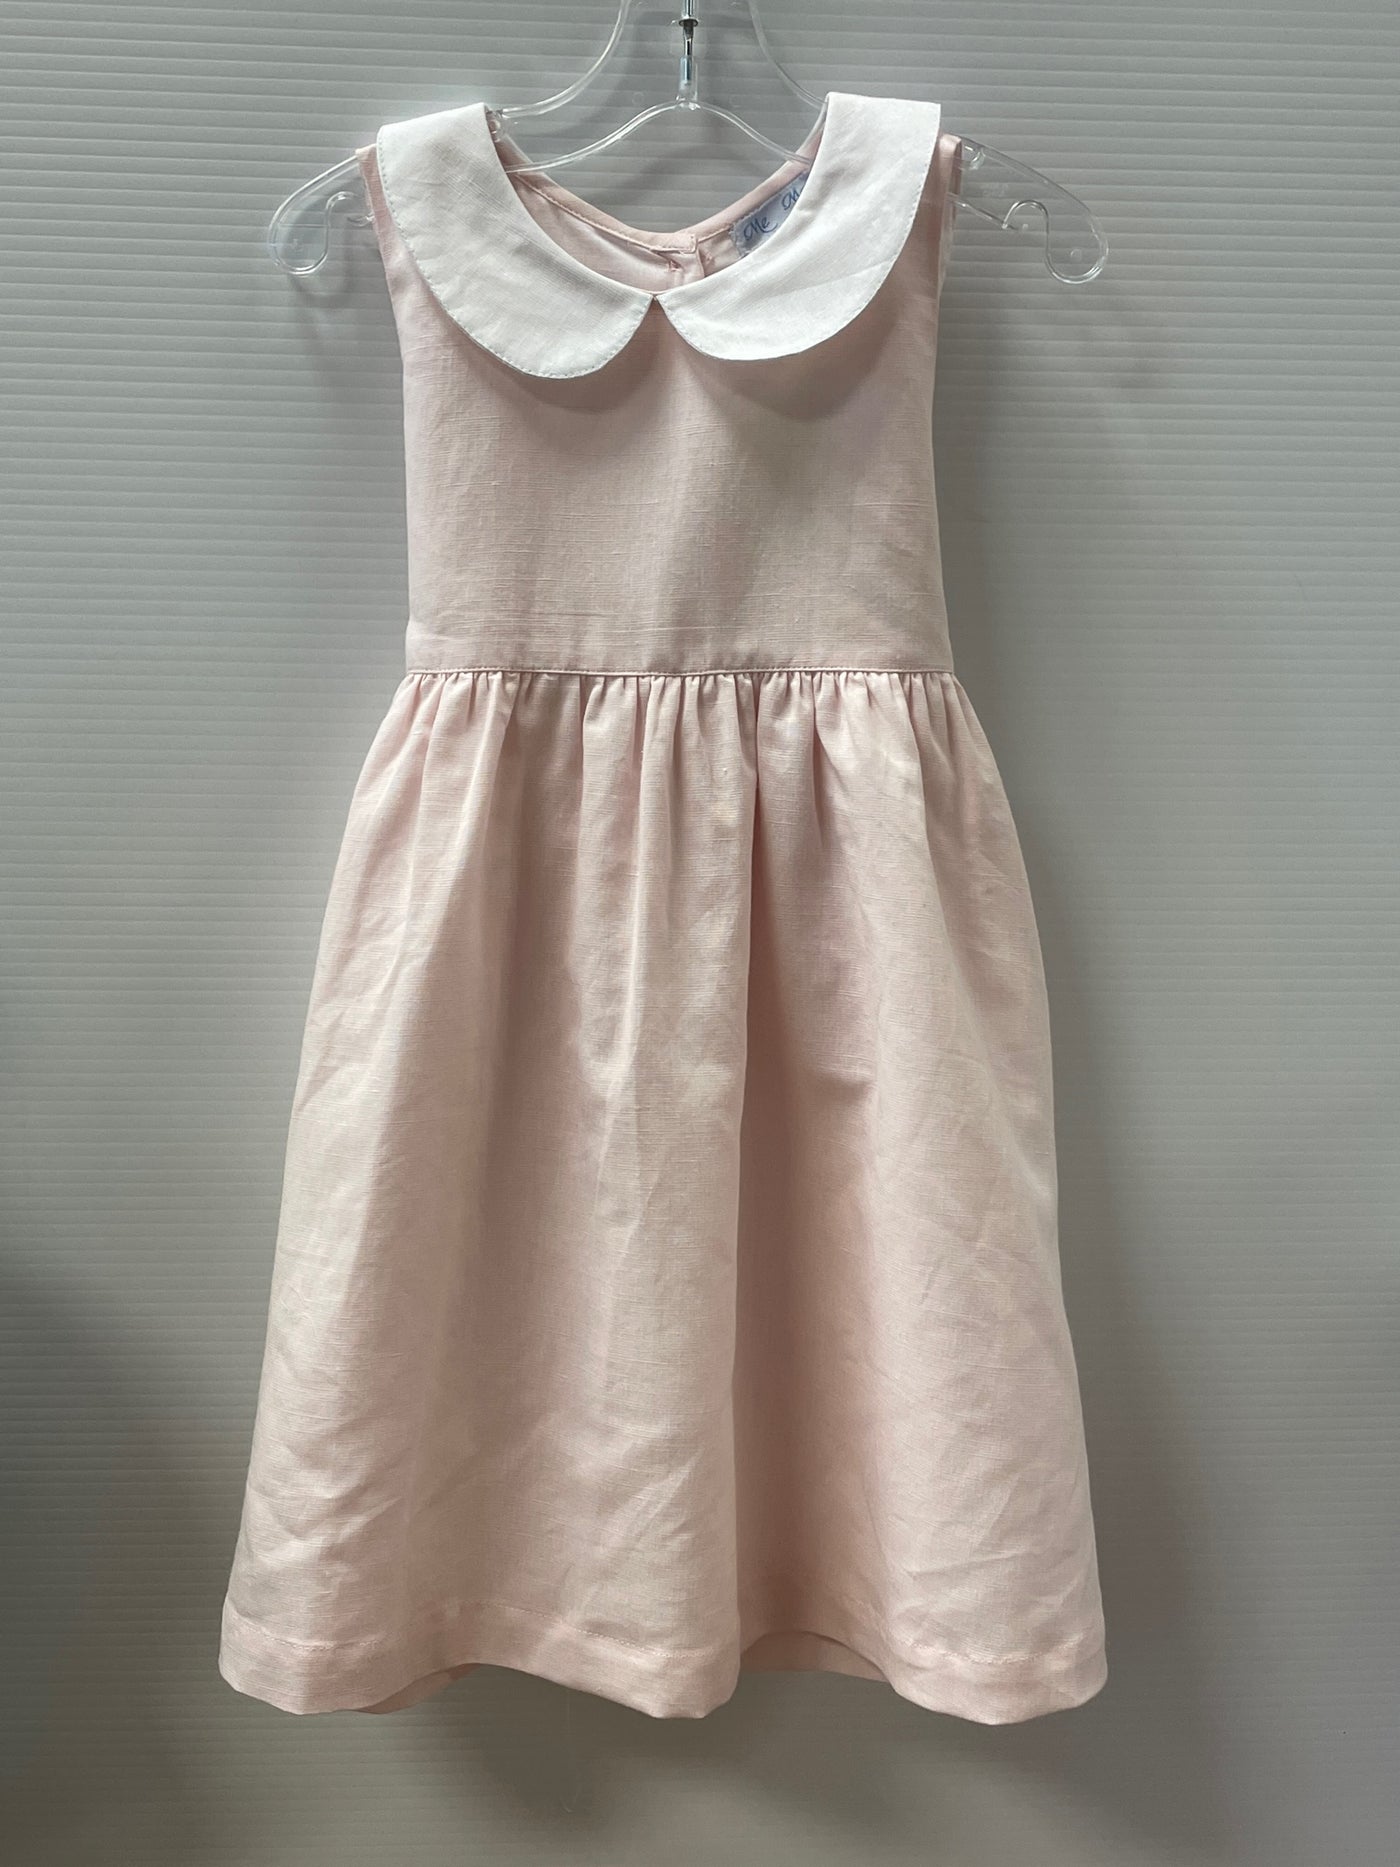 Lillian Sleeveless Dress with White Collar- Linen